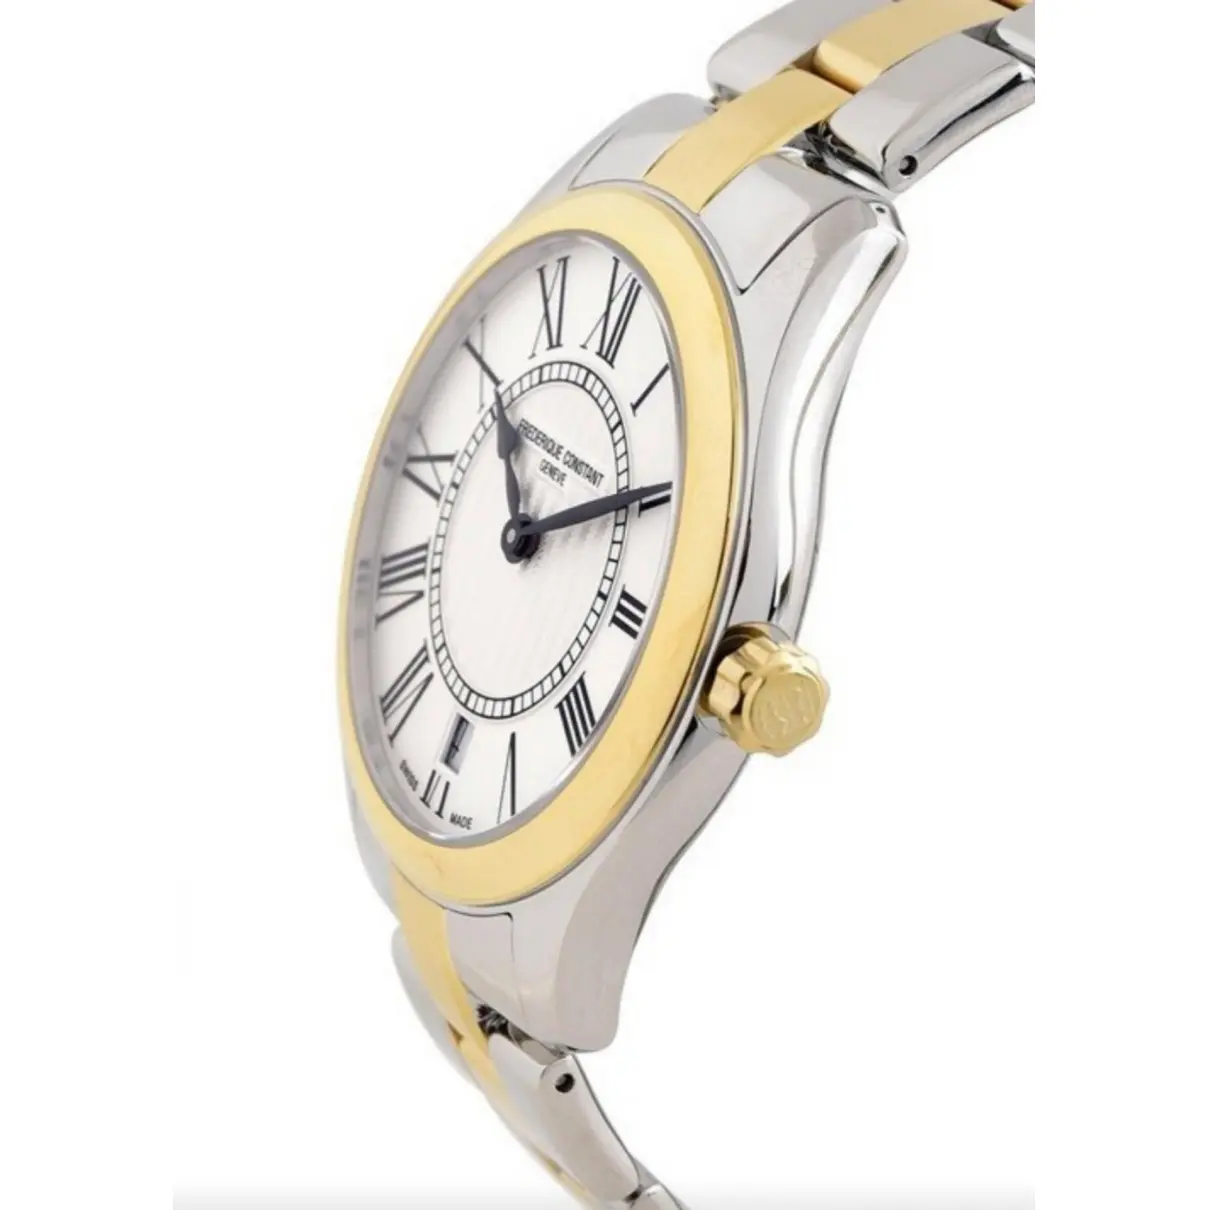 Buy Frederique Constant Yellow gold watch online